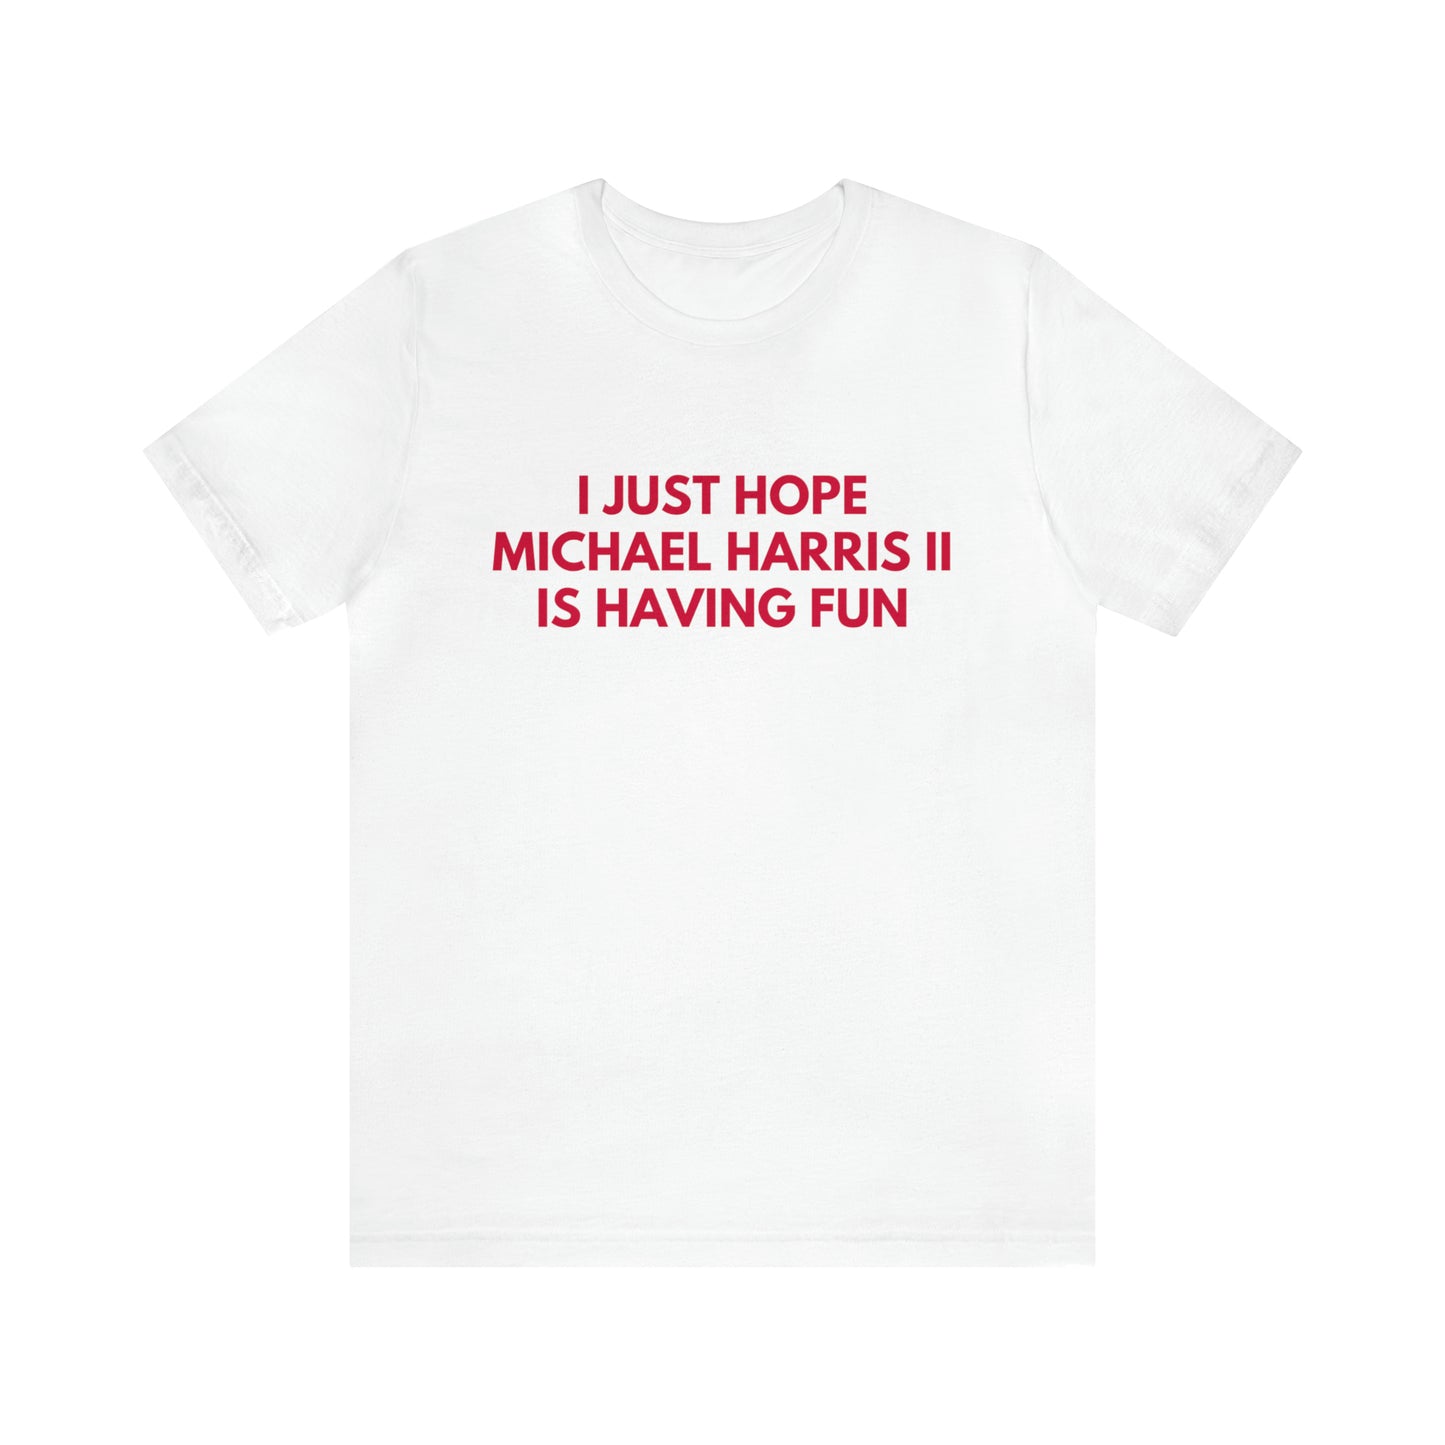 Michael Harris II Having Fun - Unisex T-shirt